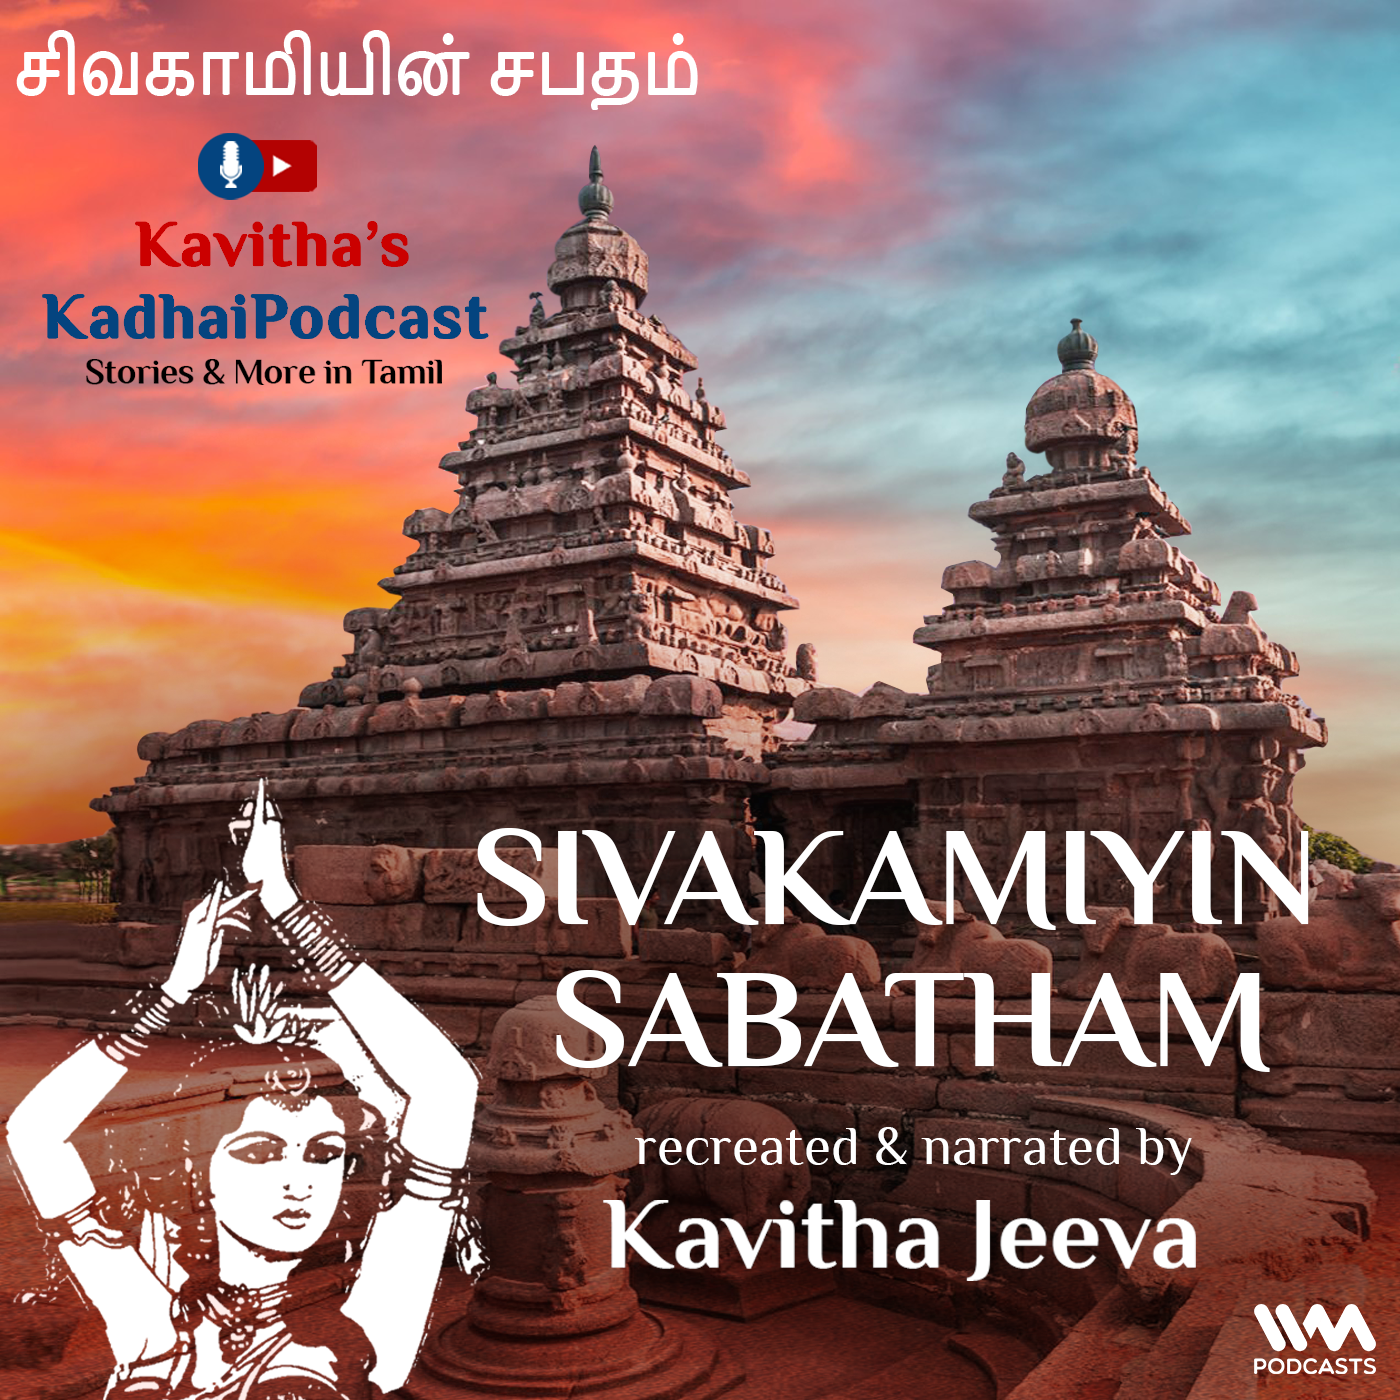 KadhaiPodcast's Sivakamiyin Sabatham with Kavitha Jeeva - Episode #96